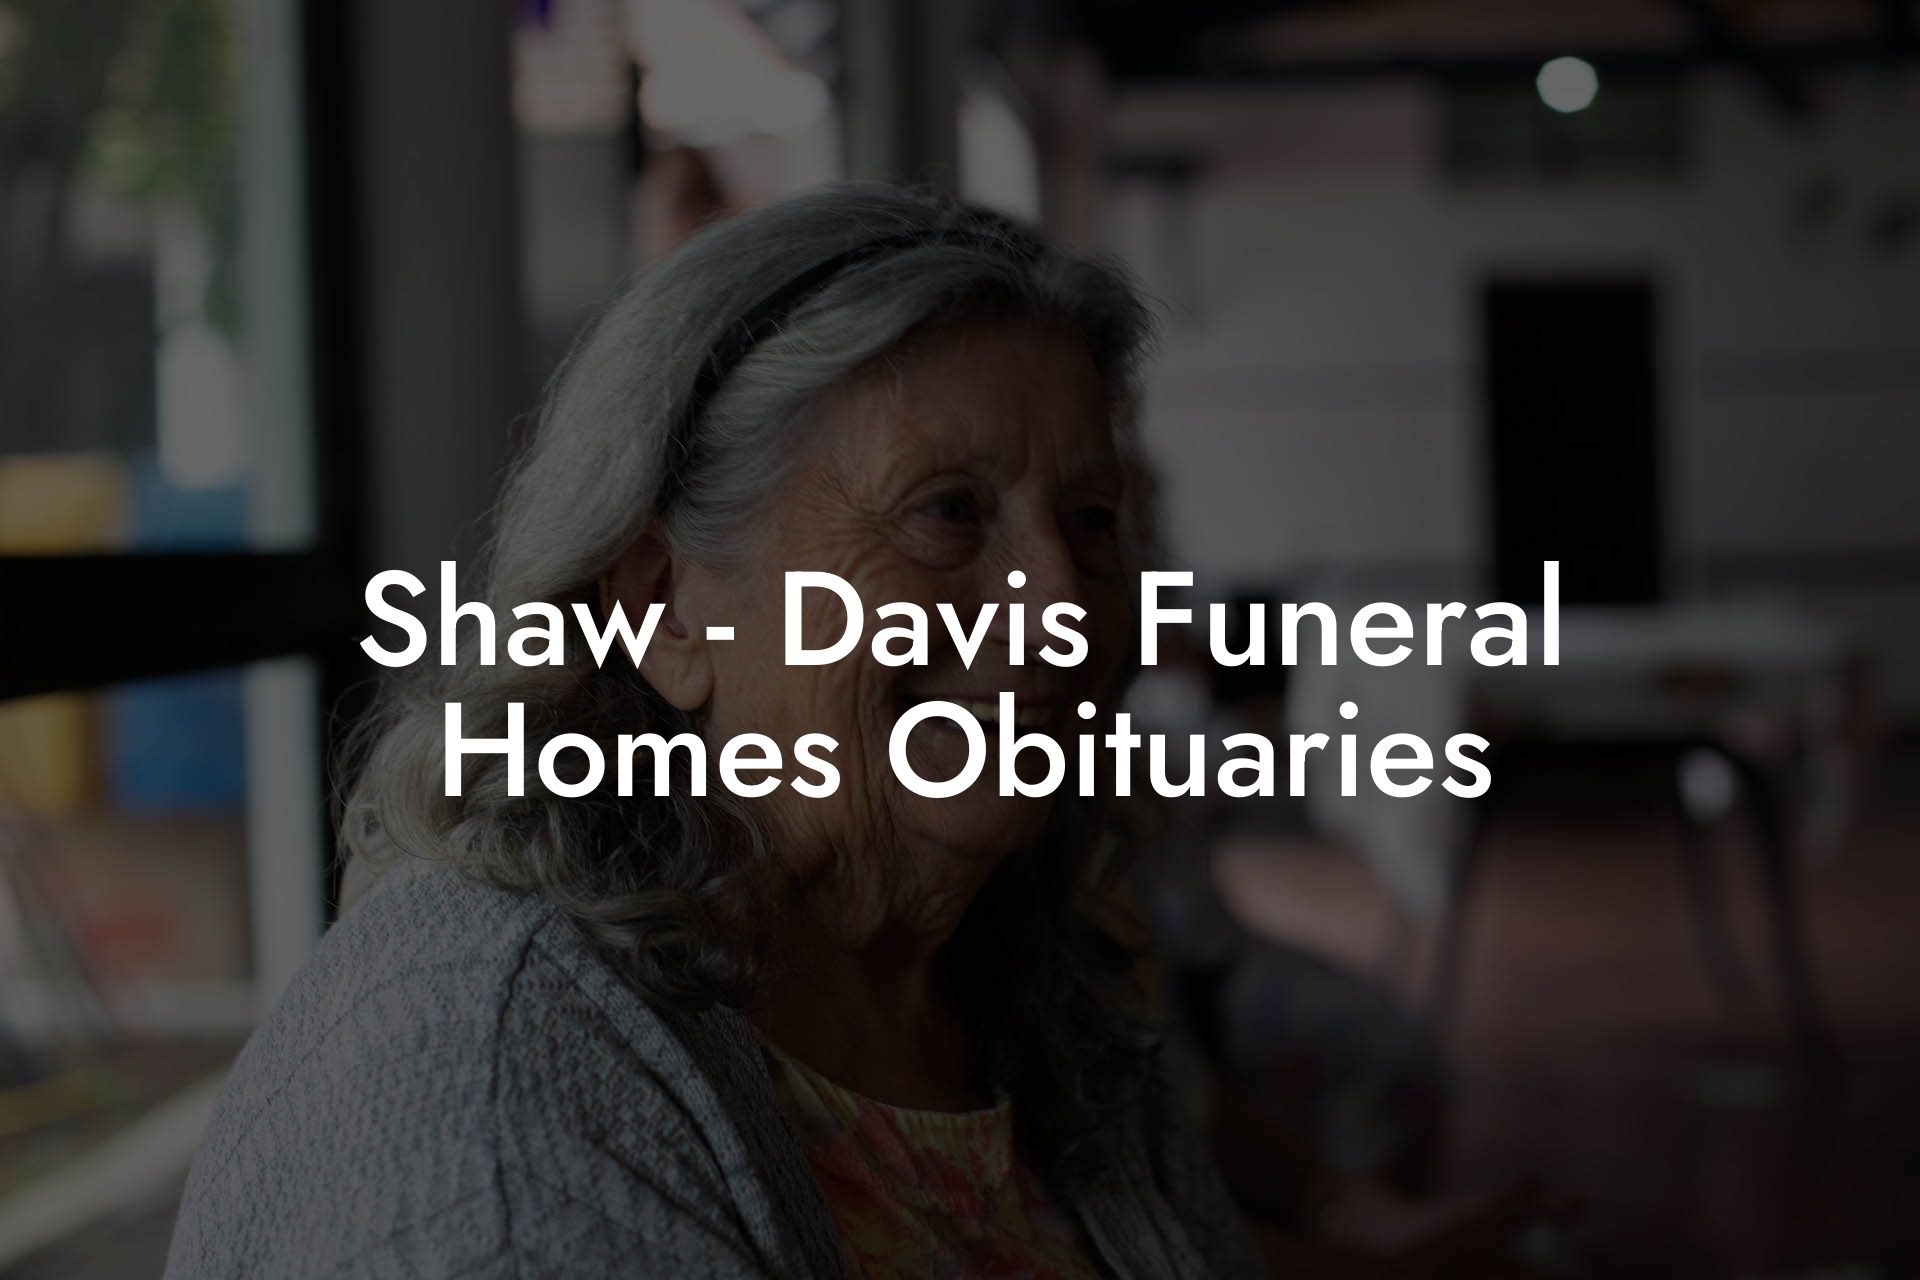 Shaw - Davis Funeral Homes Obituaries